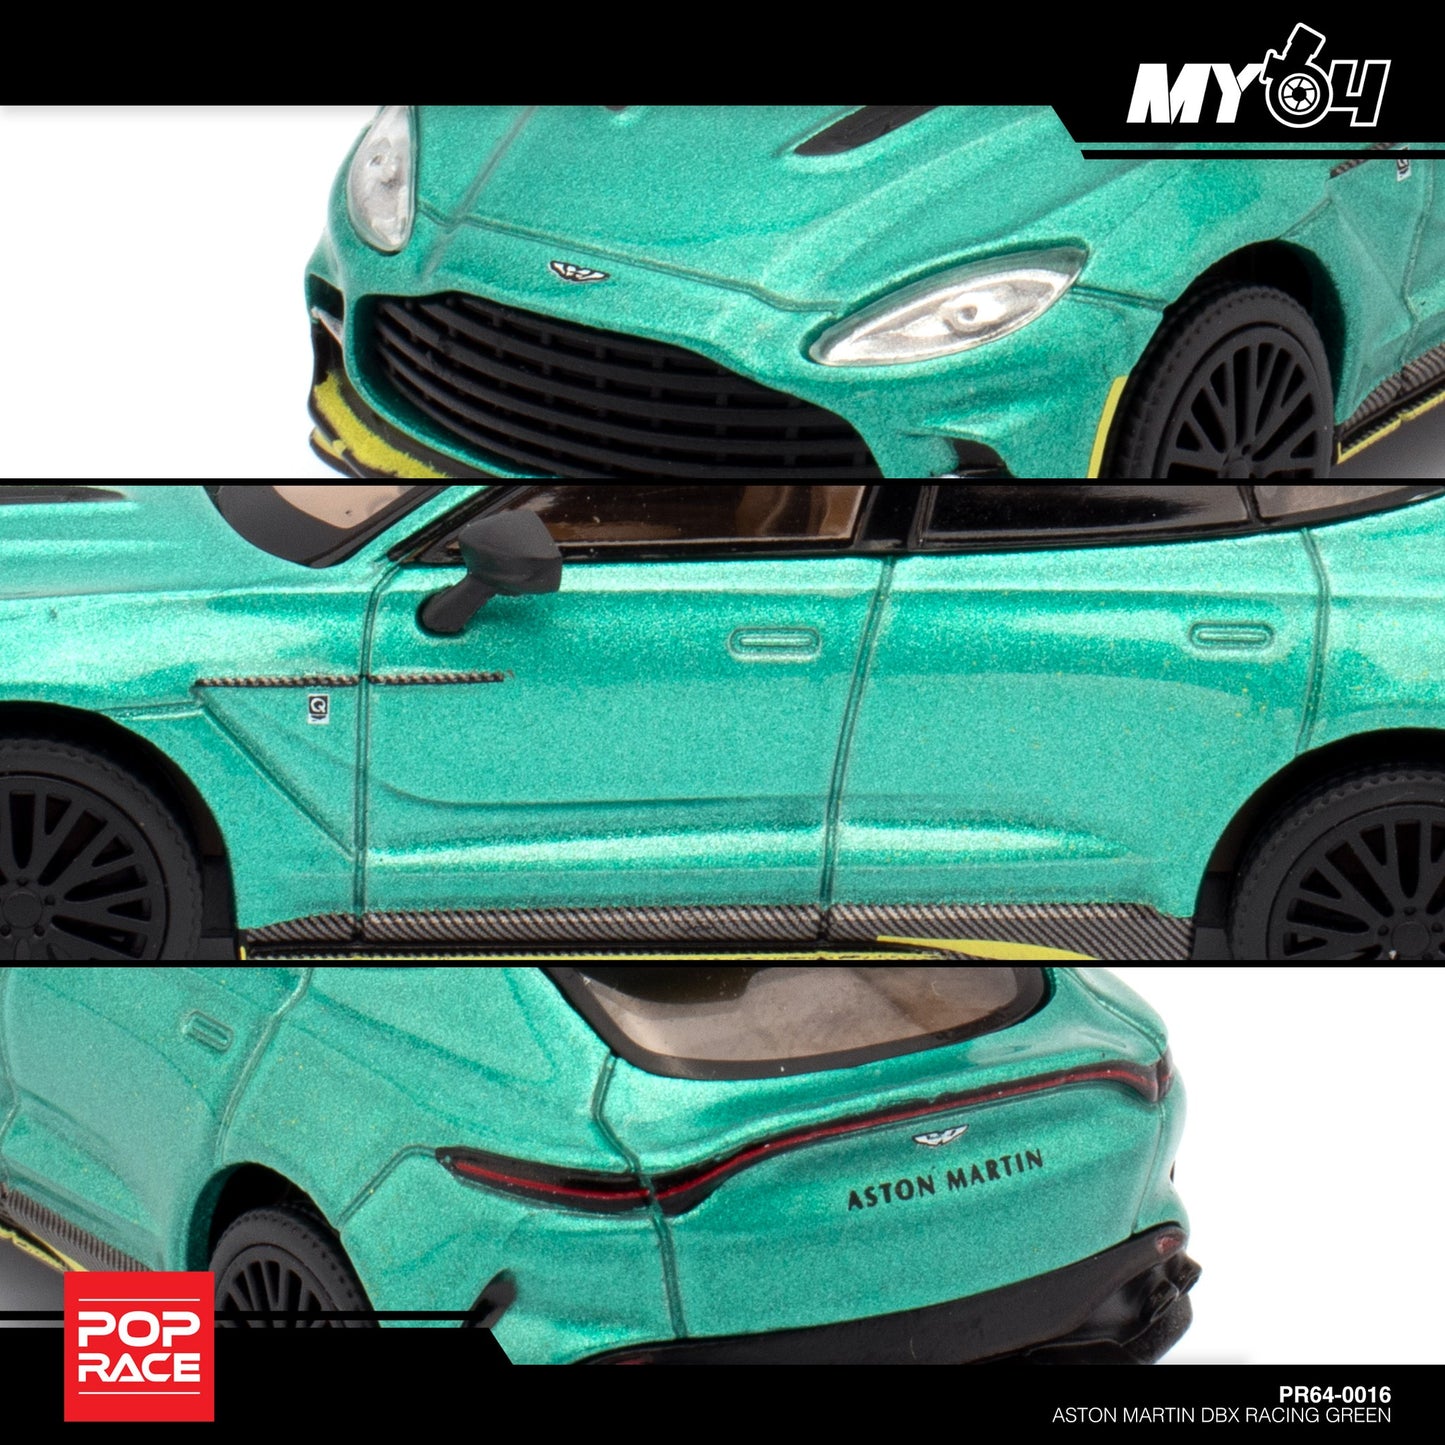 [Pop Race] Aston Martin DBX Racing - Green